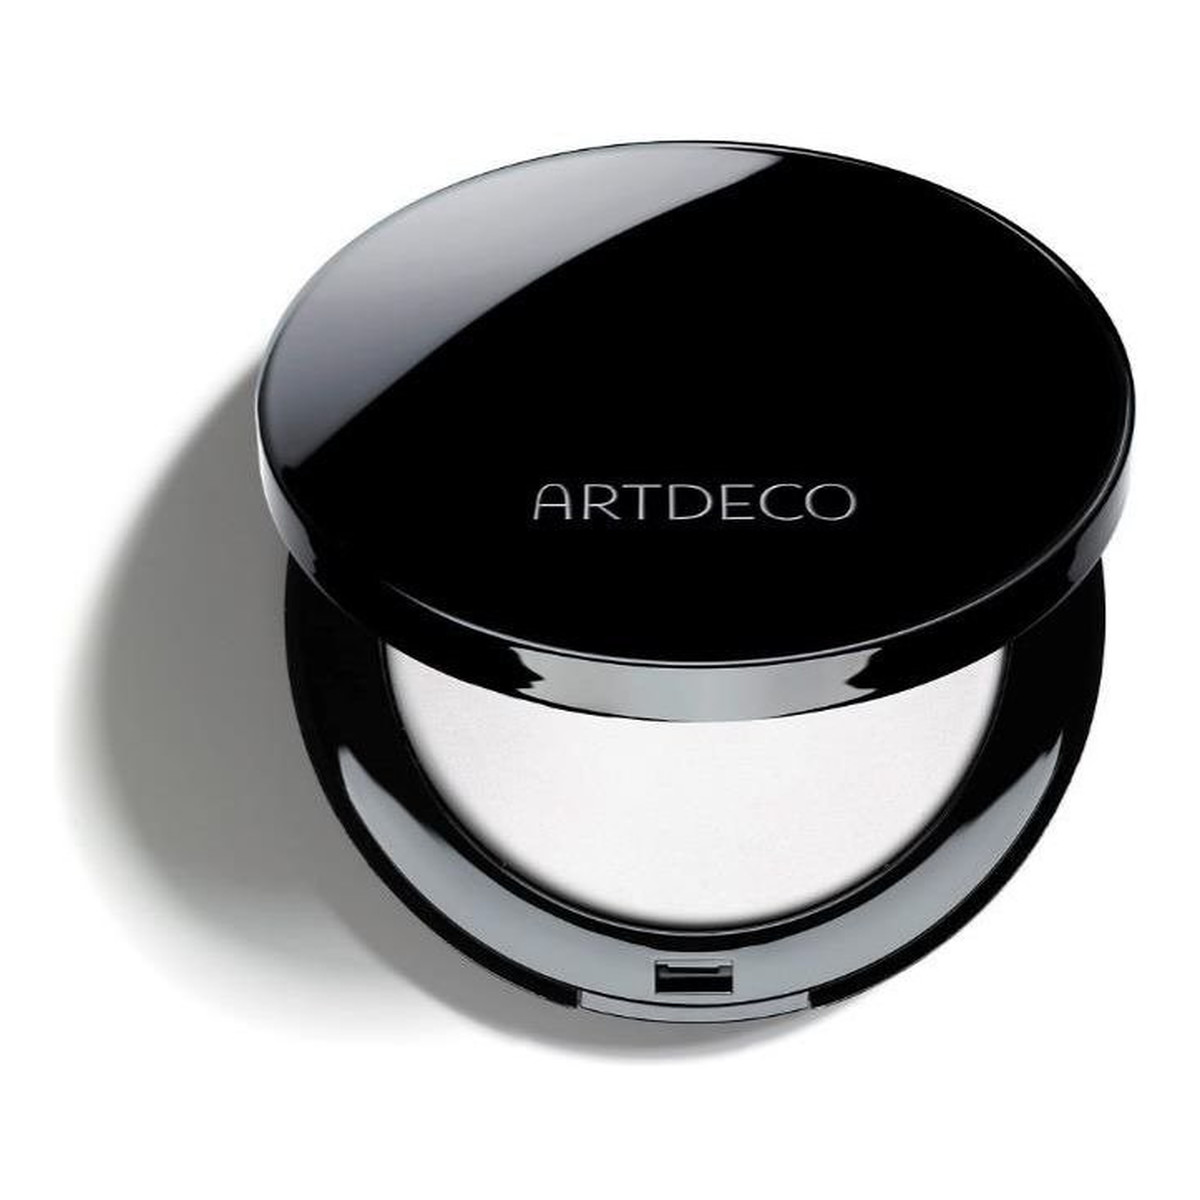 ArtDeco No Color transparentny puder utrwalający makijaż 12g